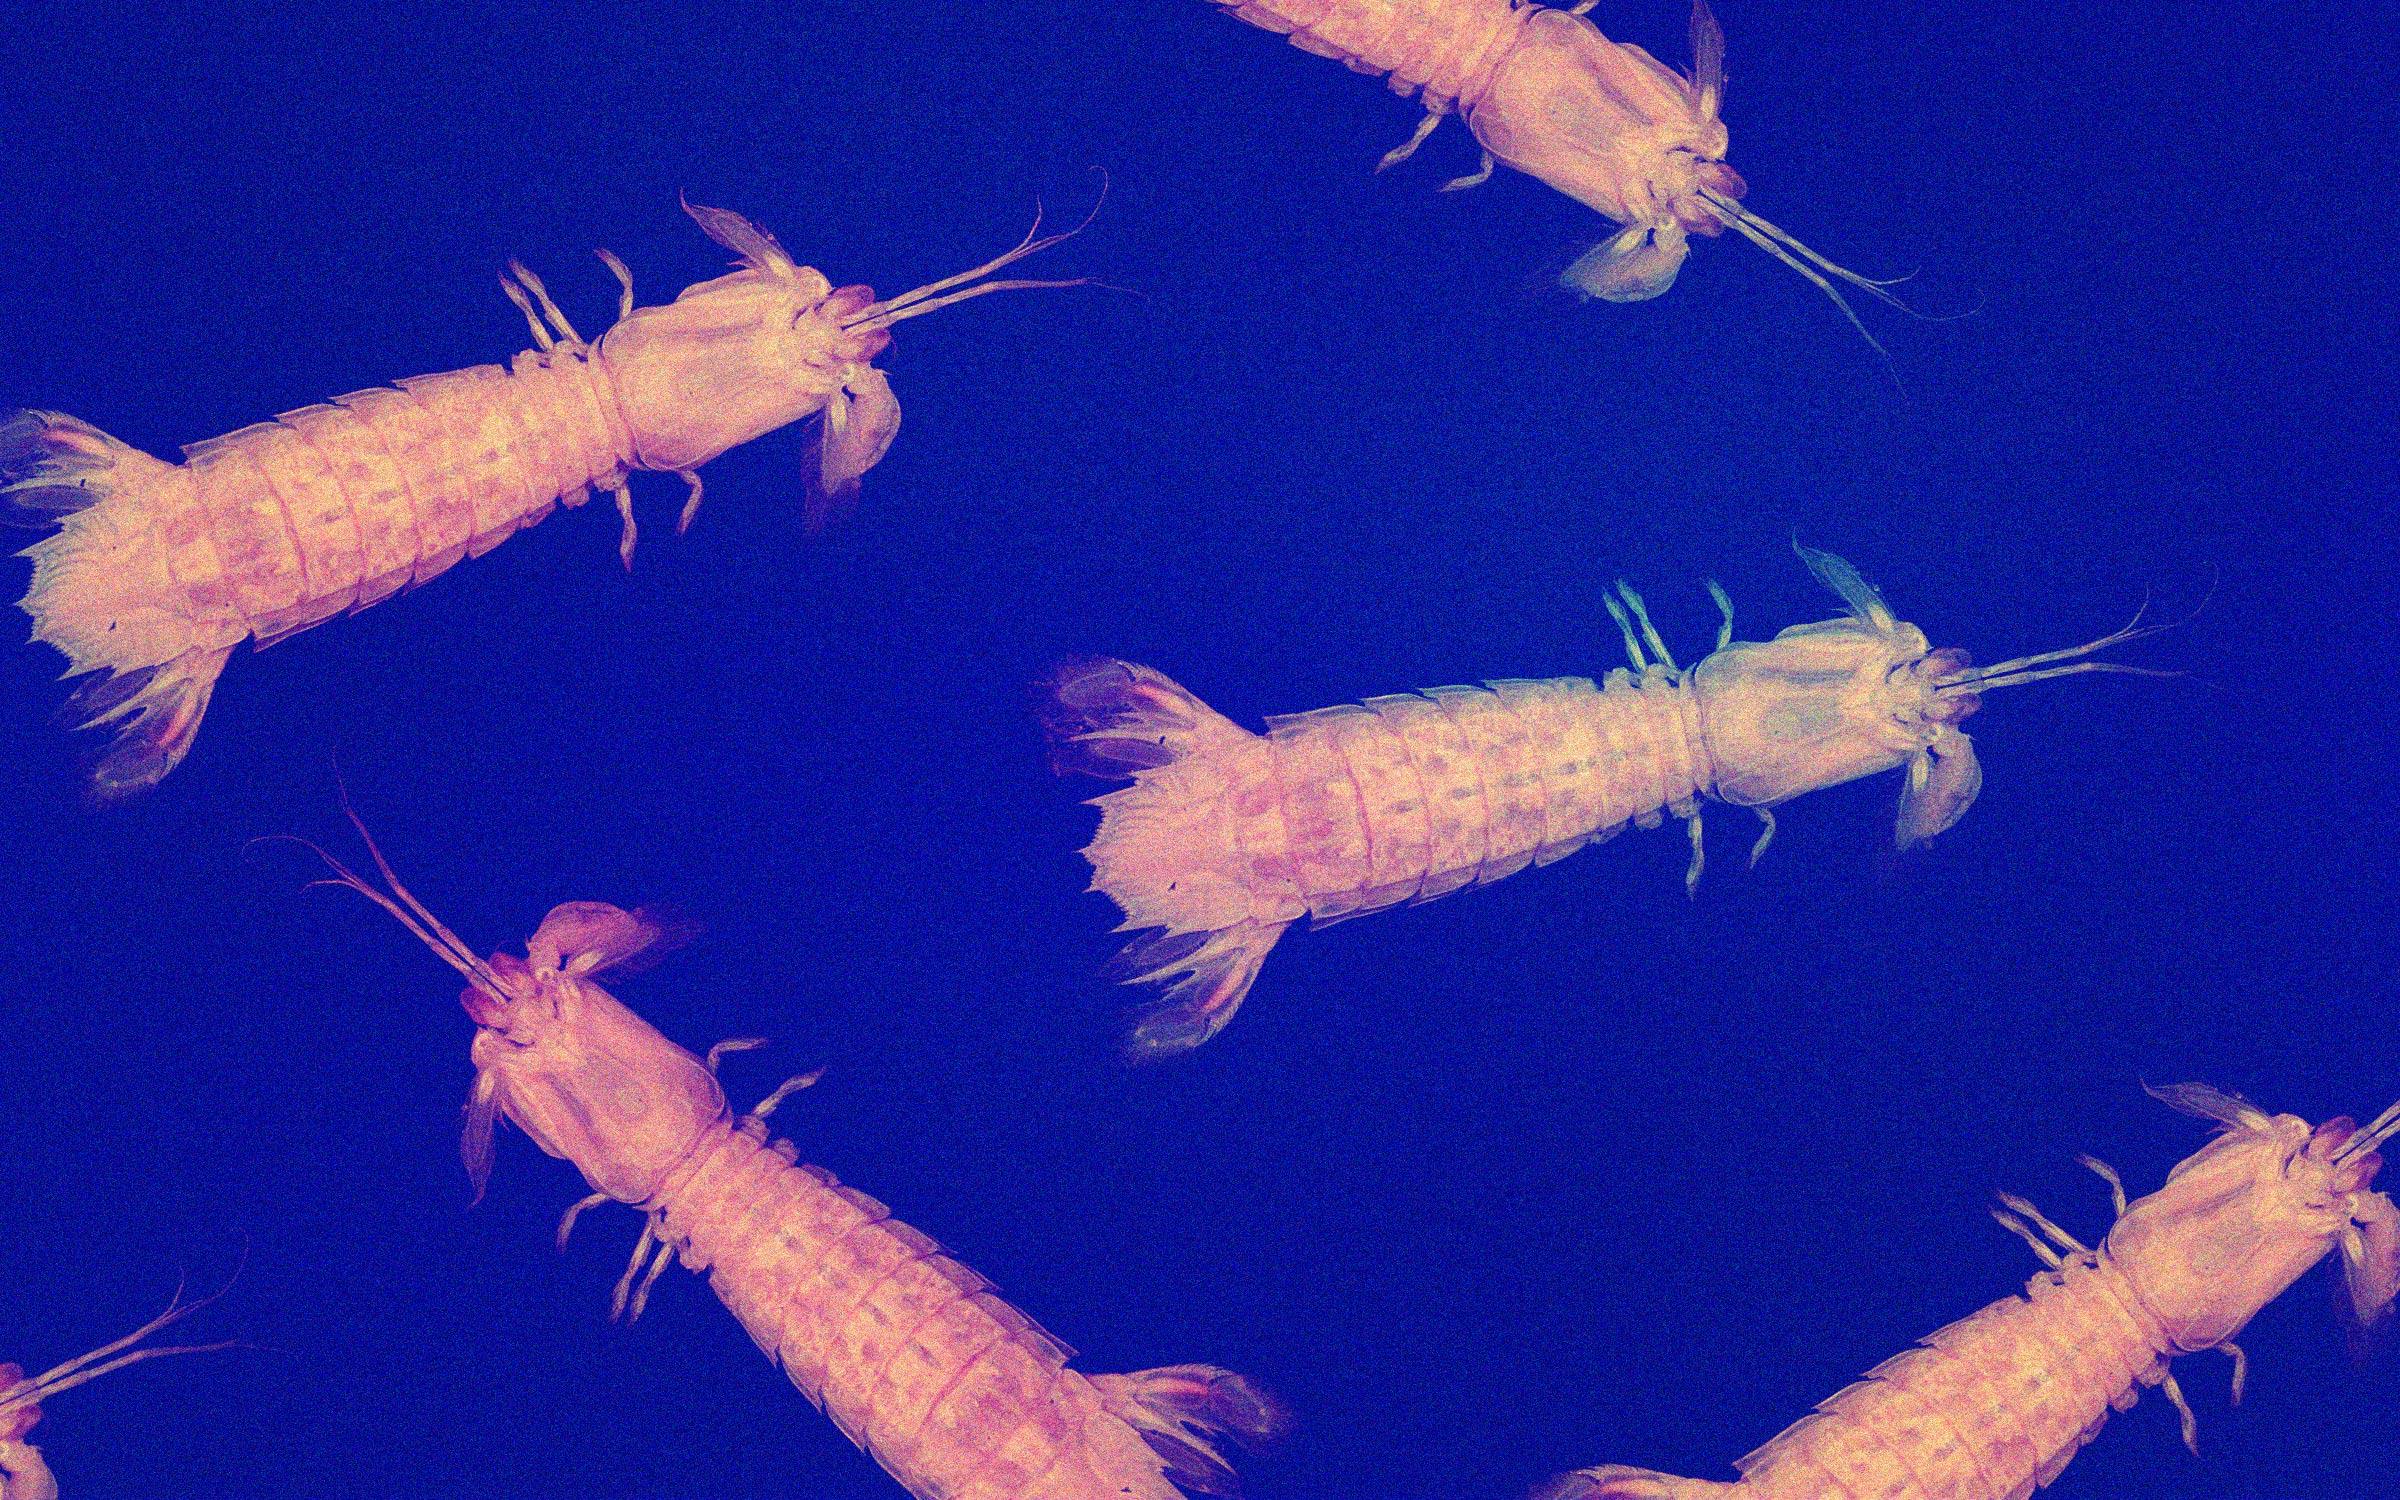 https://img.texasmonthly.com/2023/02/mantis-shrimp.jpg?auto=compress&crop=faces&fit=fit&fm=pjpg&ixlib=php-3.3.1&q=45